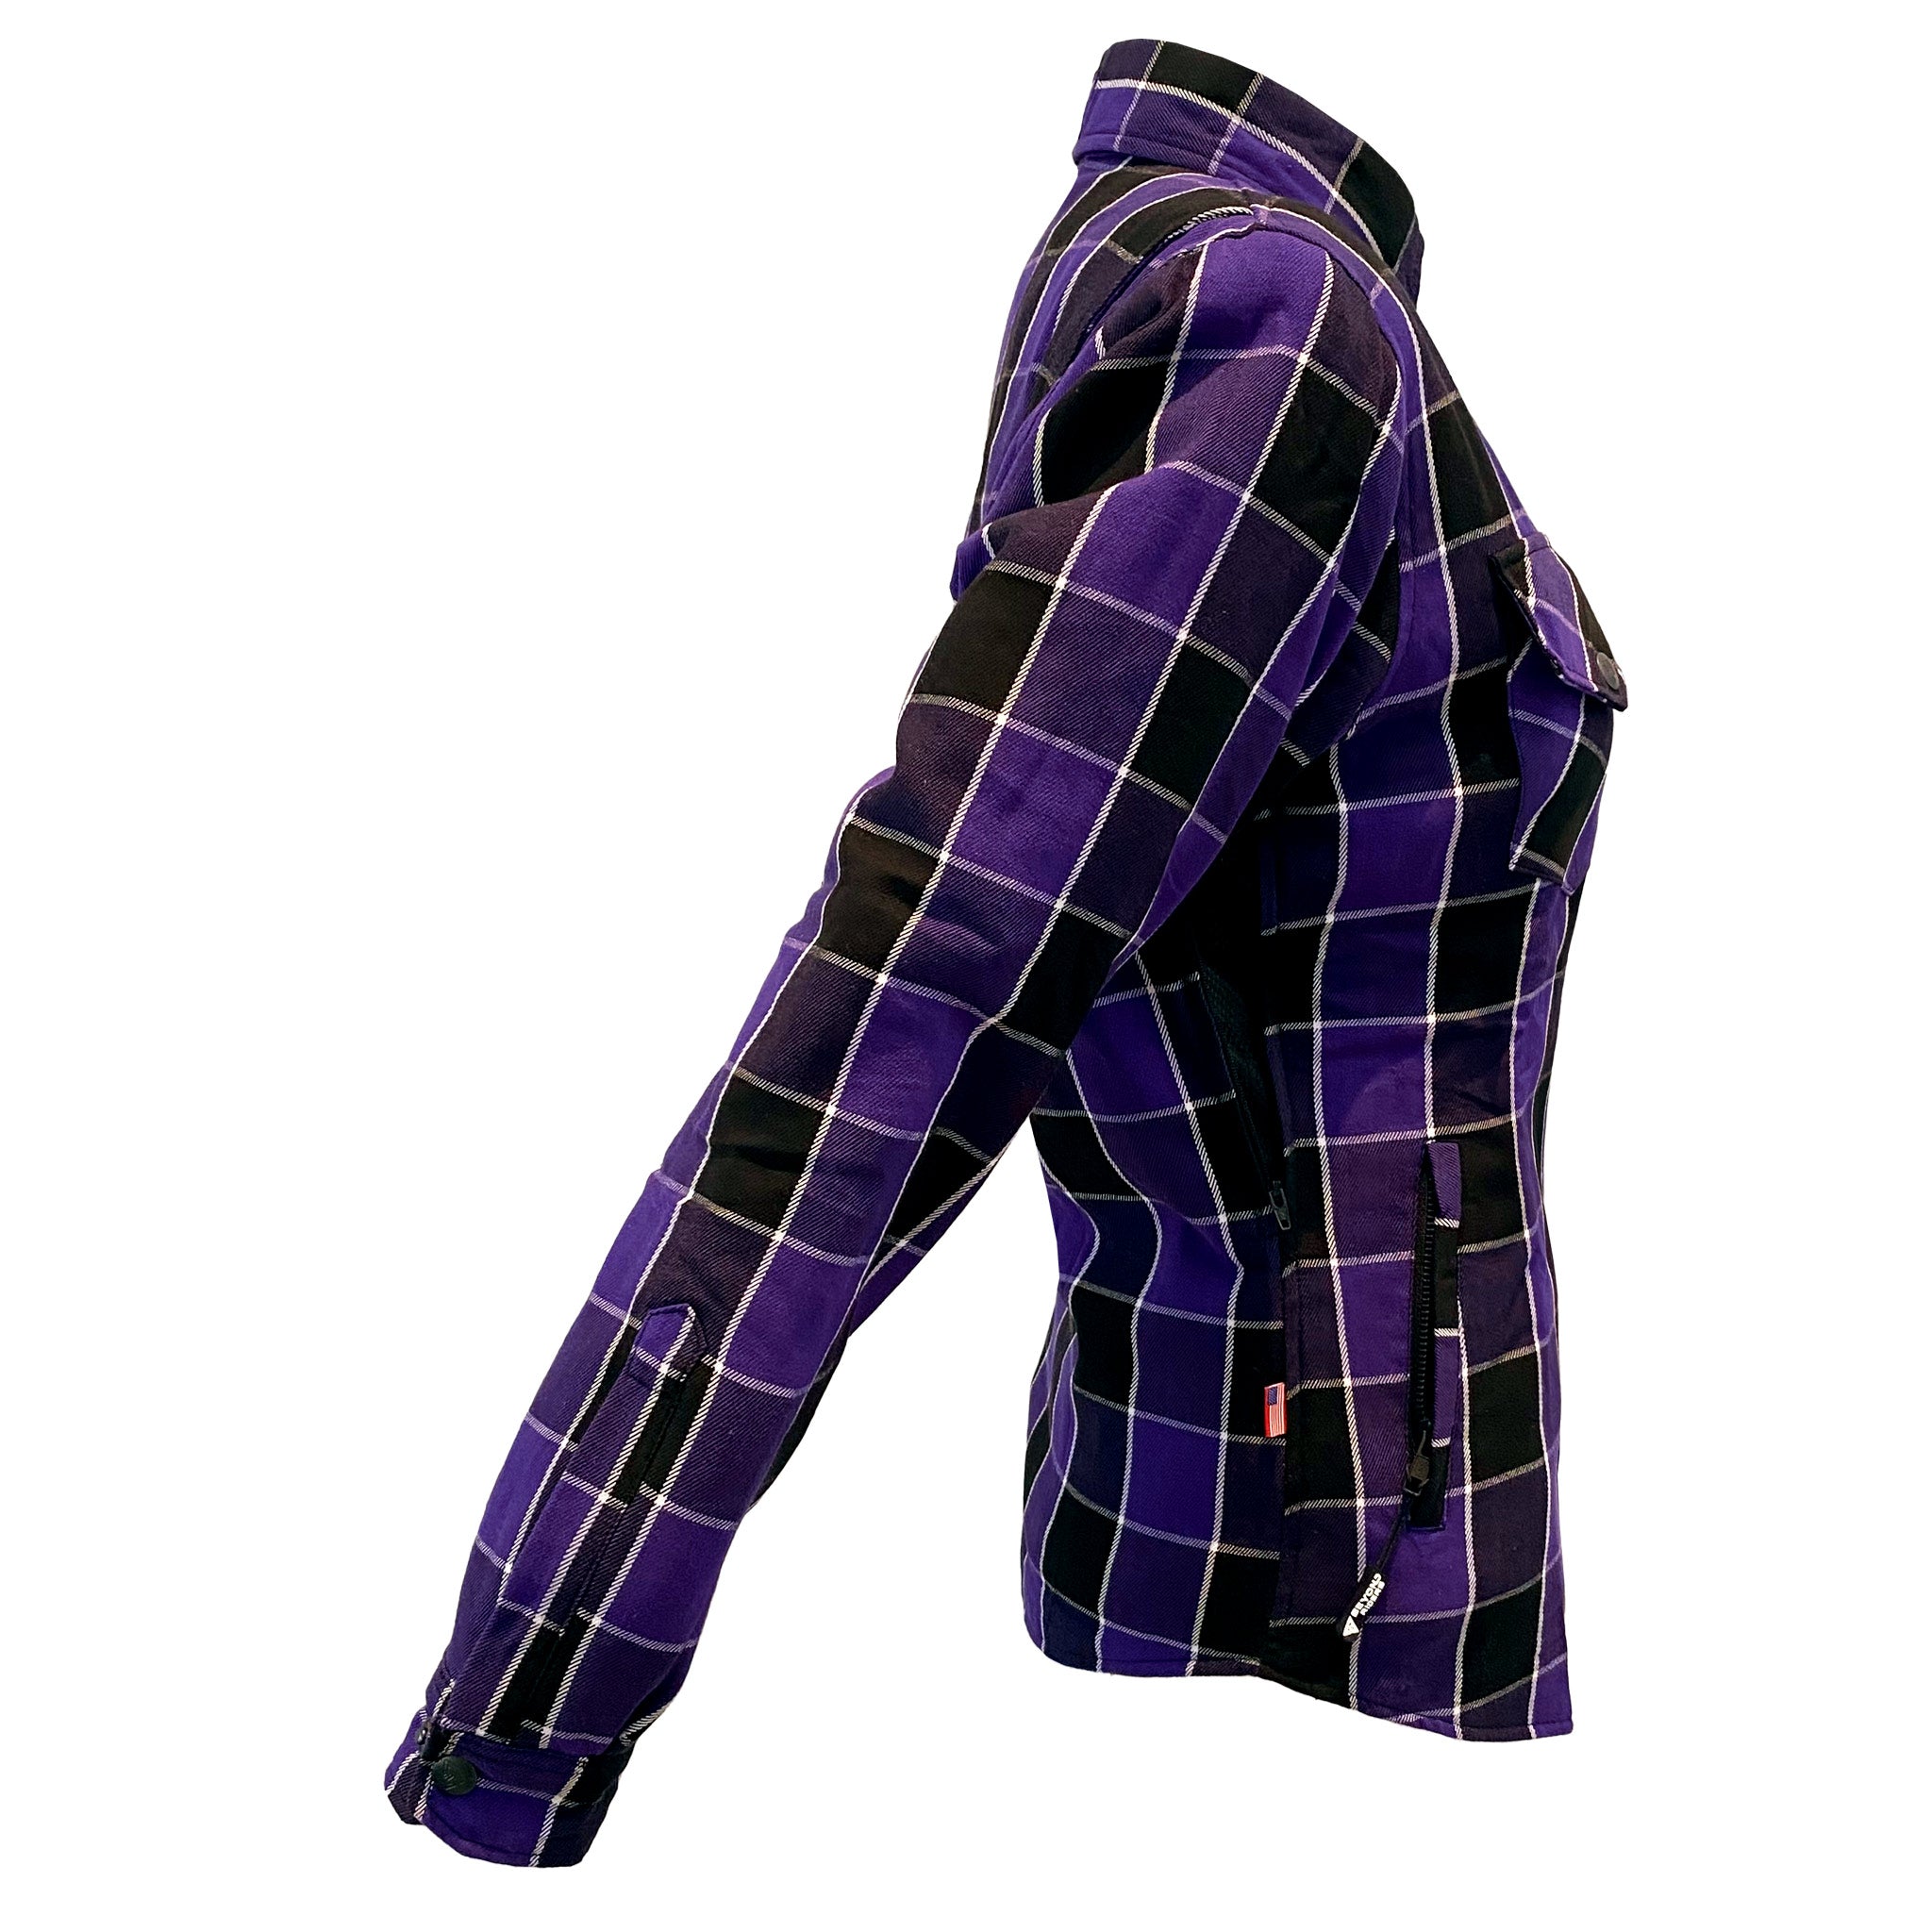 Protective Flannel Shirt for Women - Purple Black & White Stripes